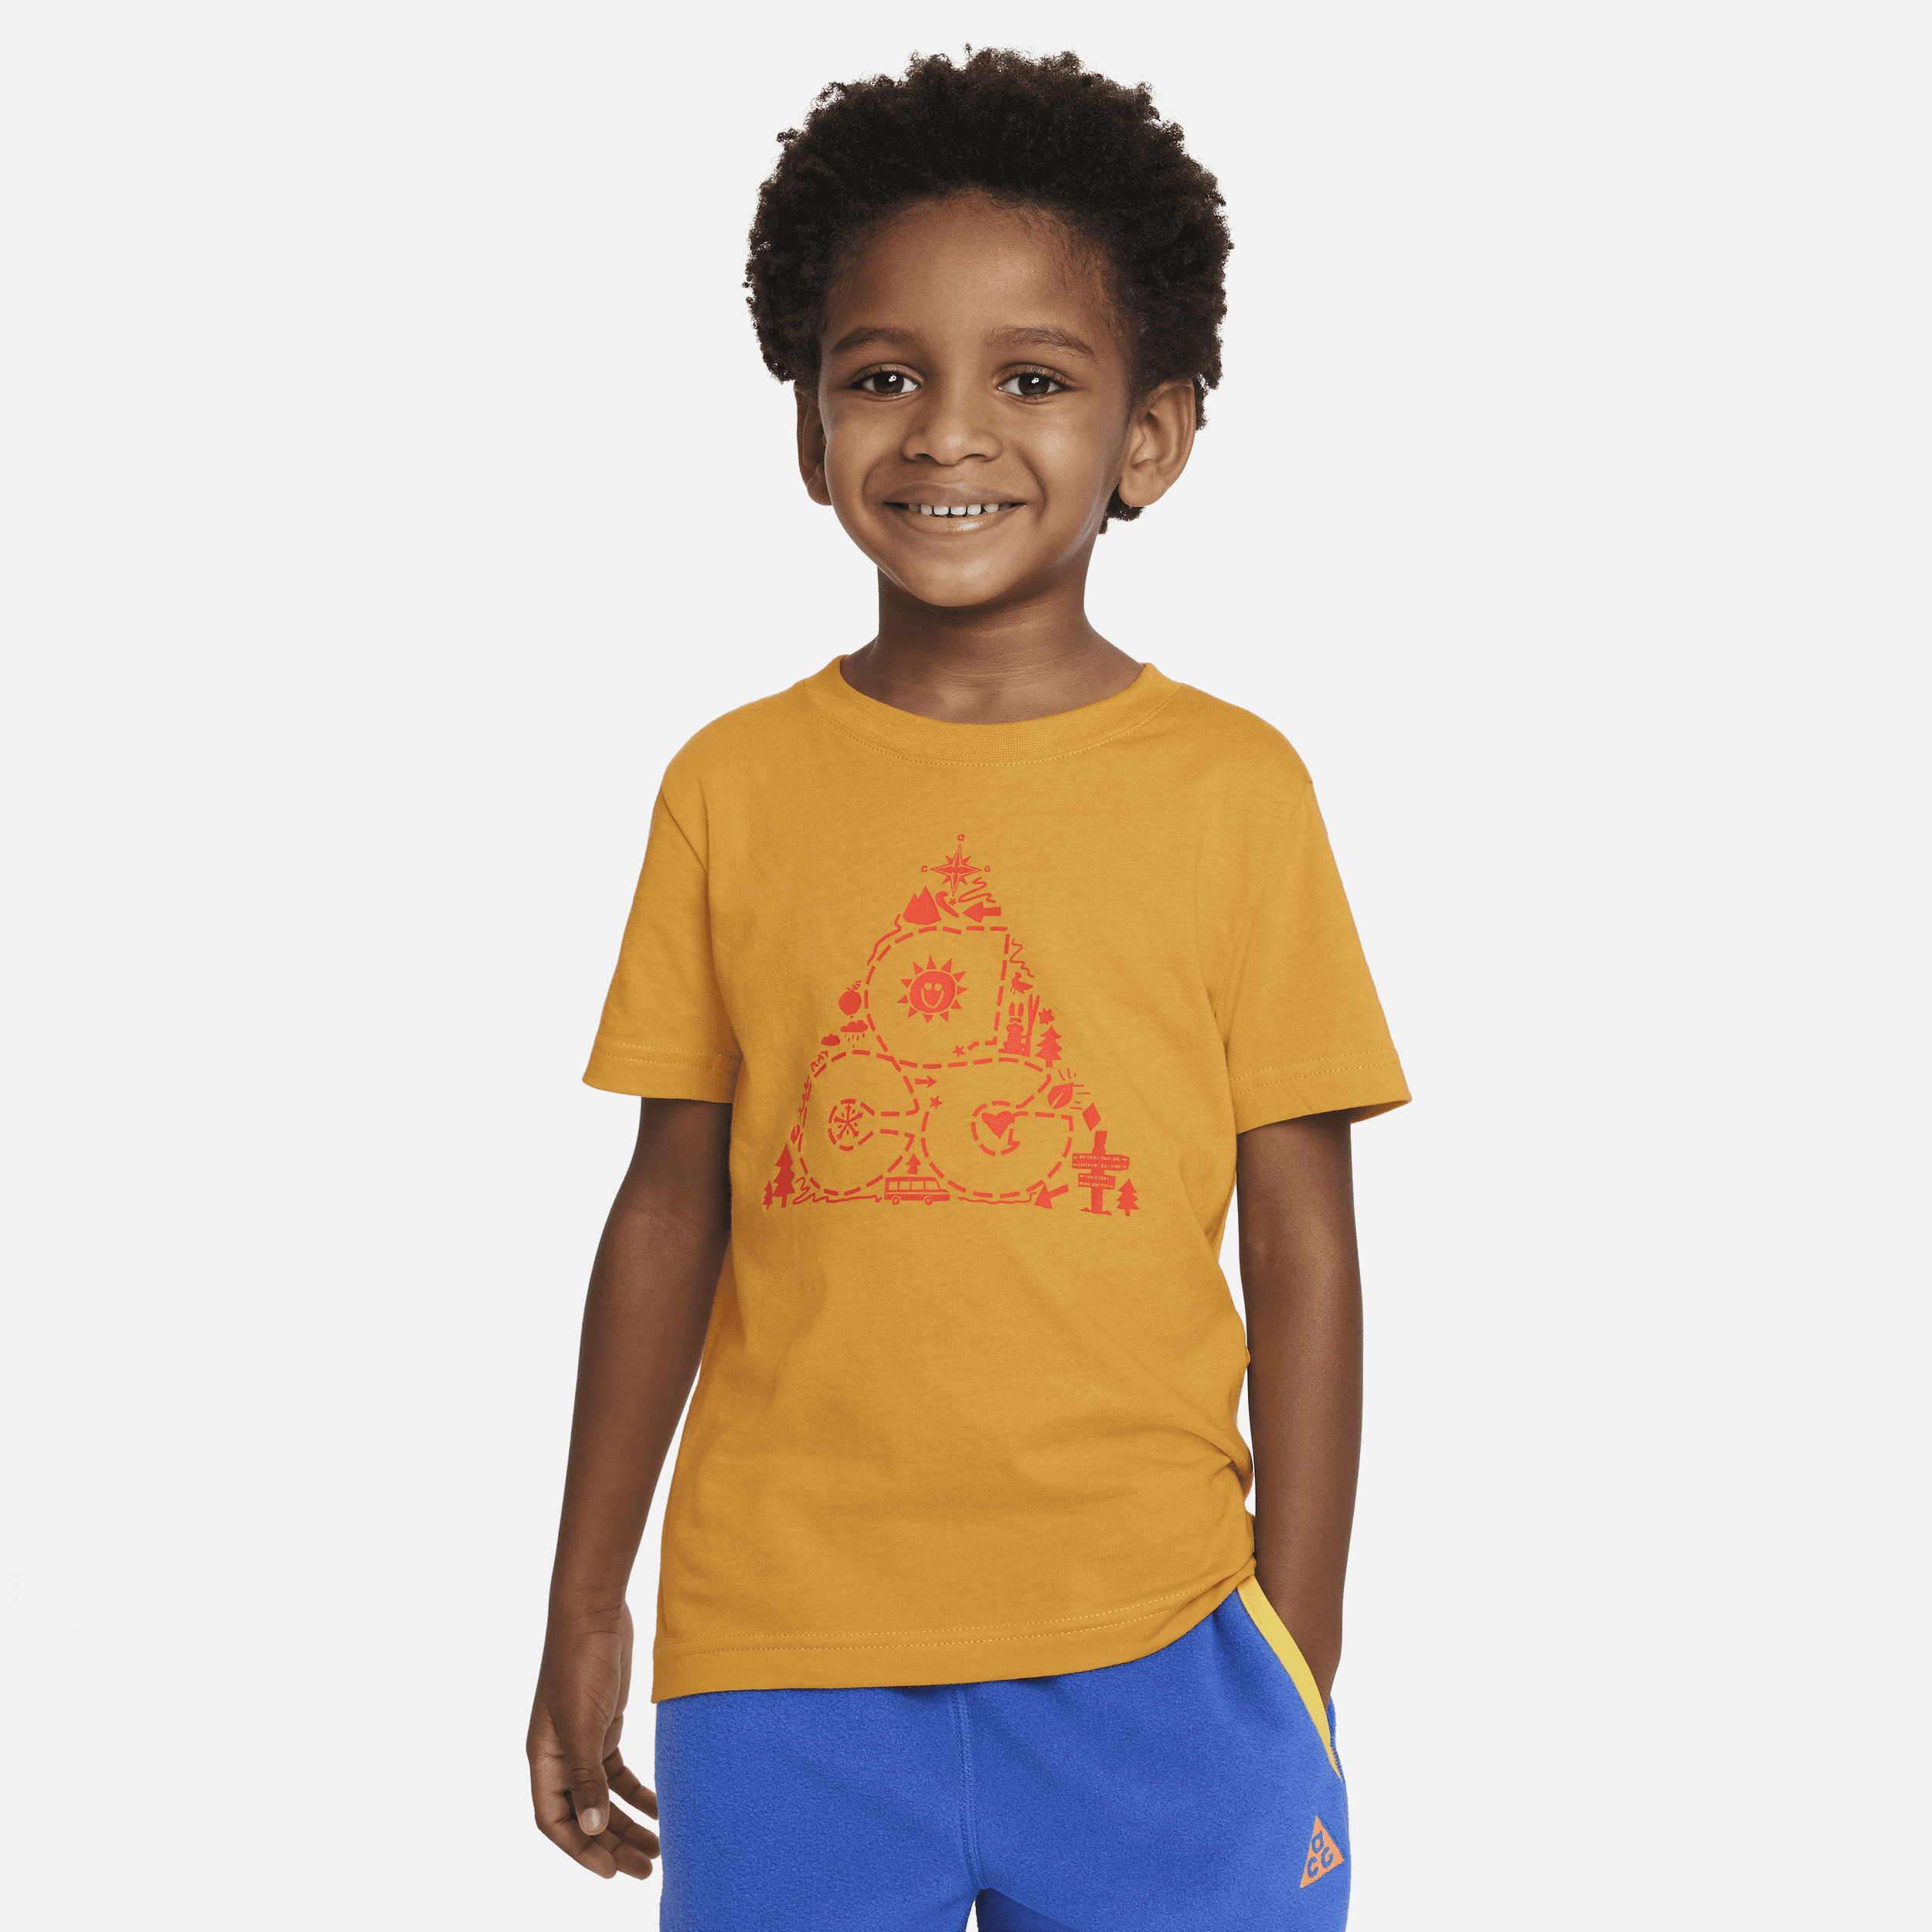 Nike Camiseta ACG - Niño/a pequeño/a - Amarillo